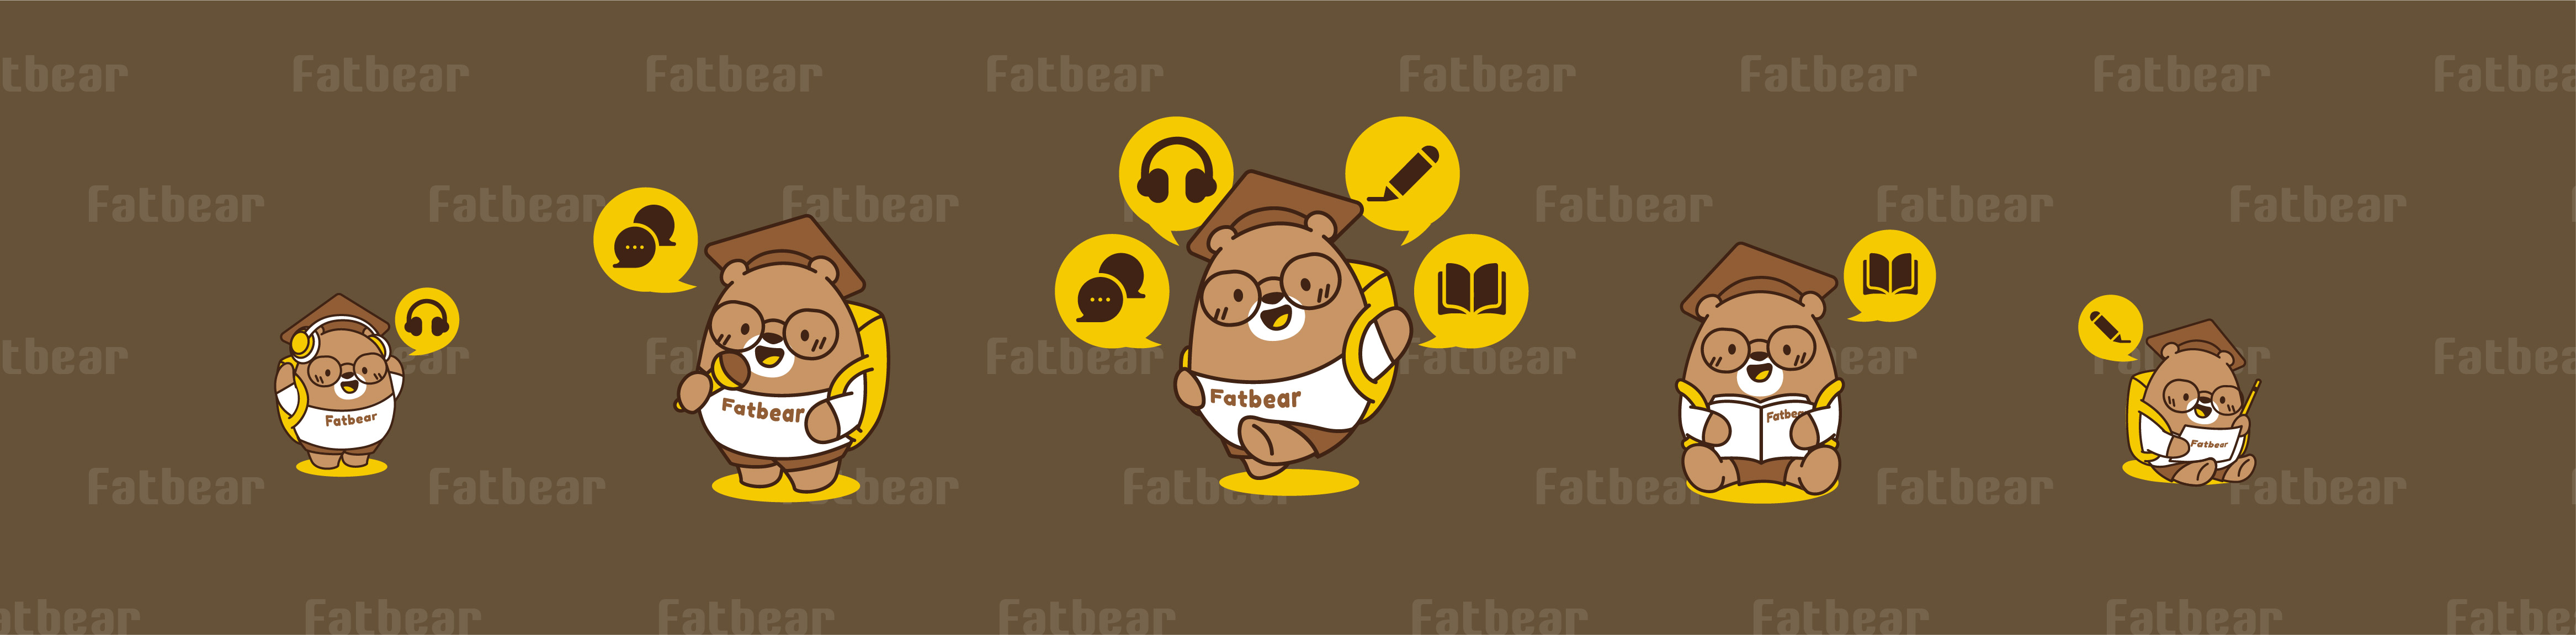 FAT BEAR